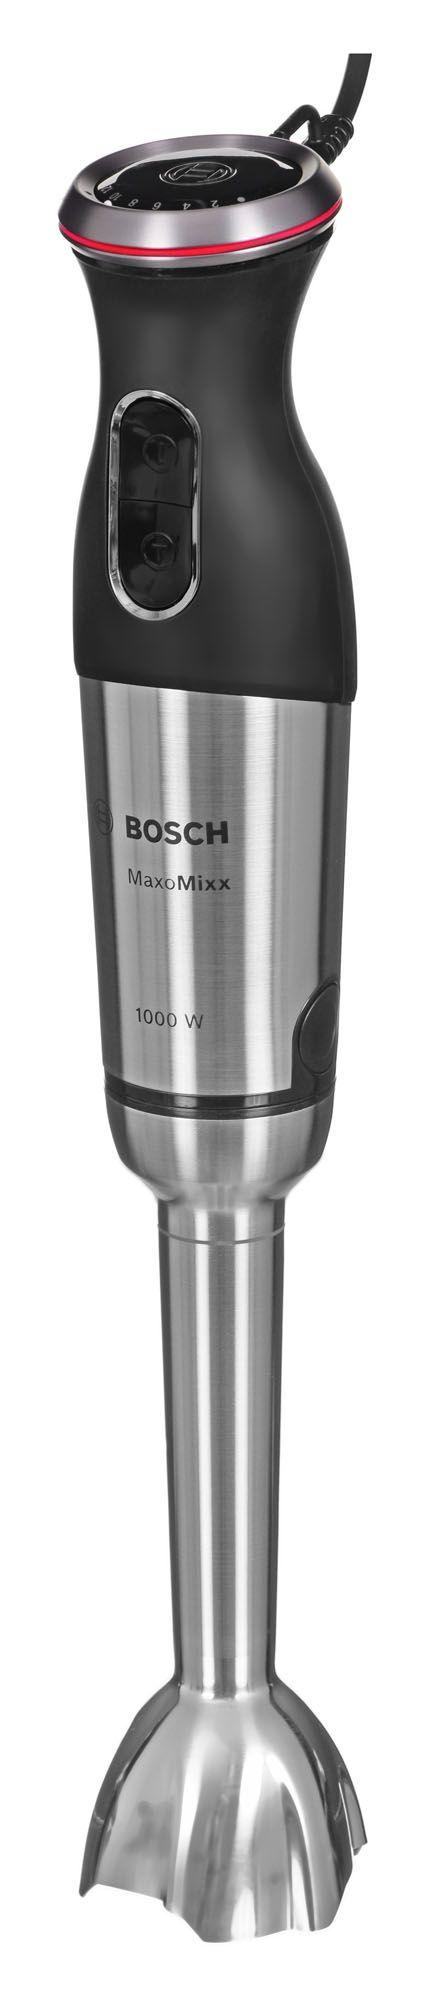 Bosch MaxoMixx blender